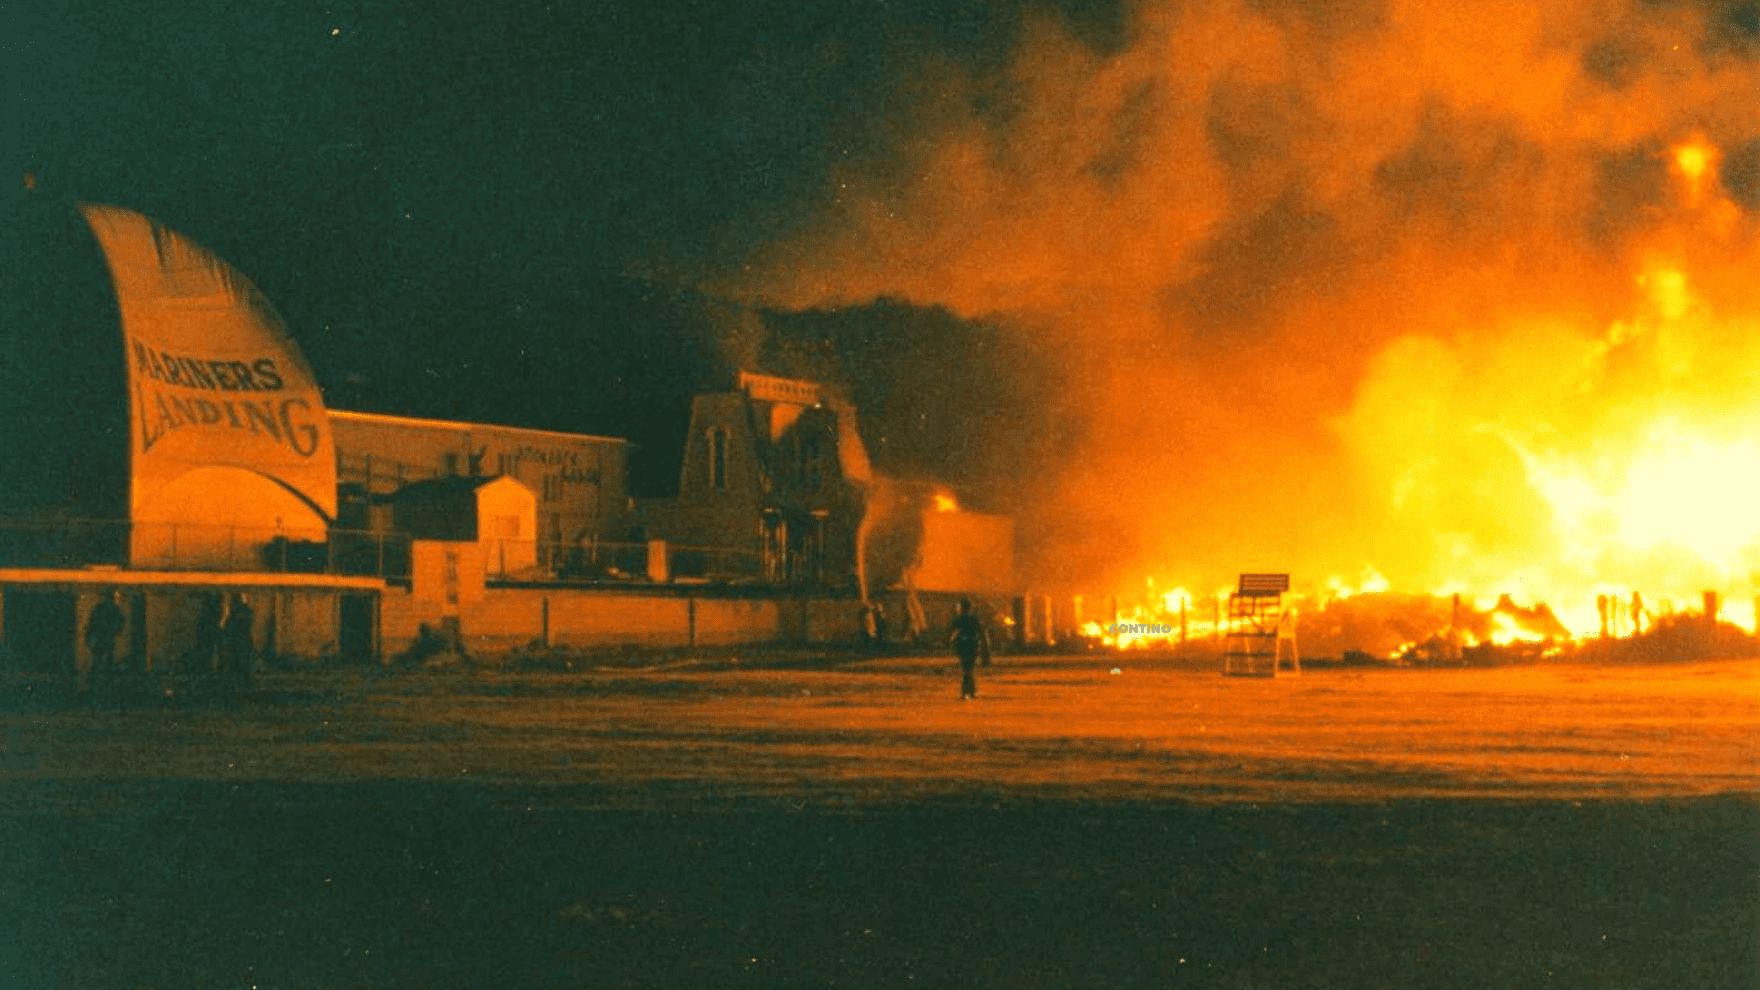 Remembering The Hunt’s Starlight Ballroom Fire